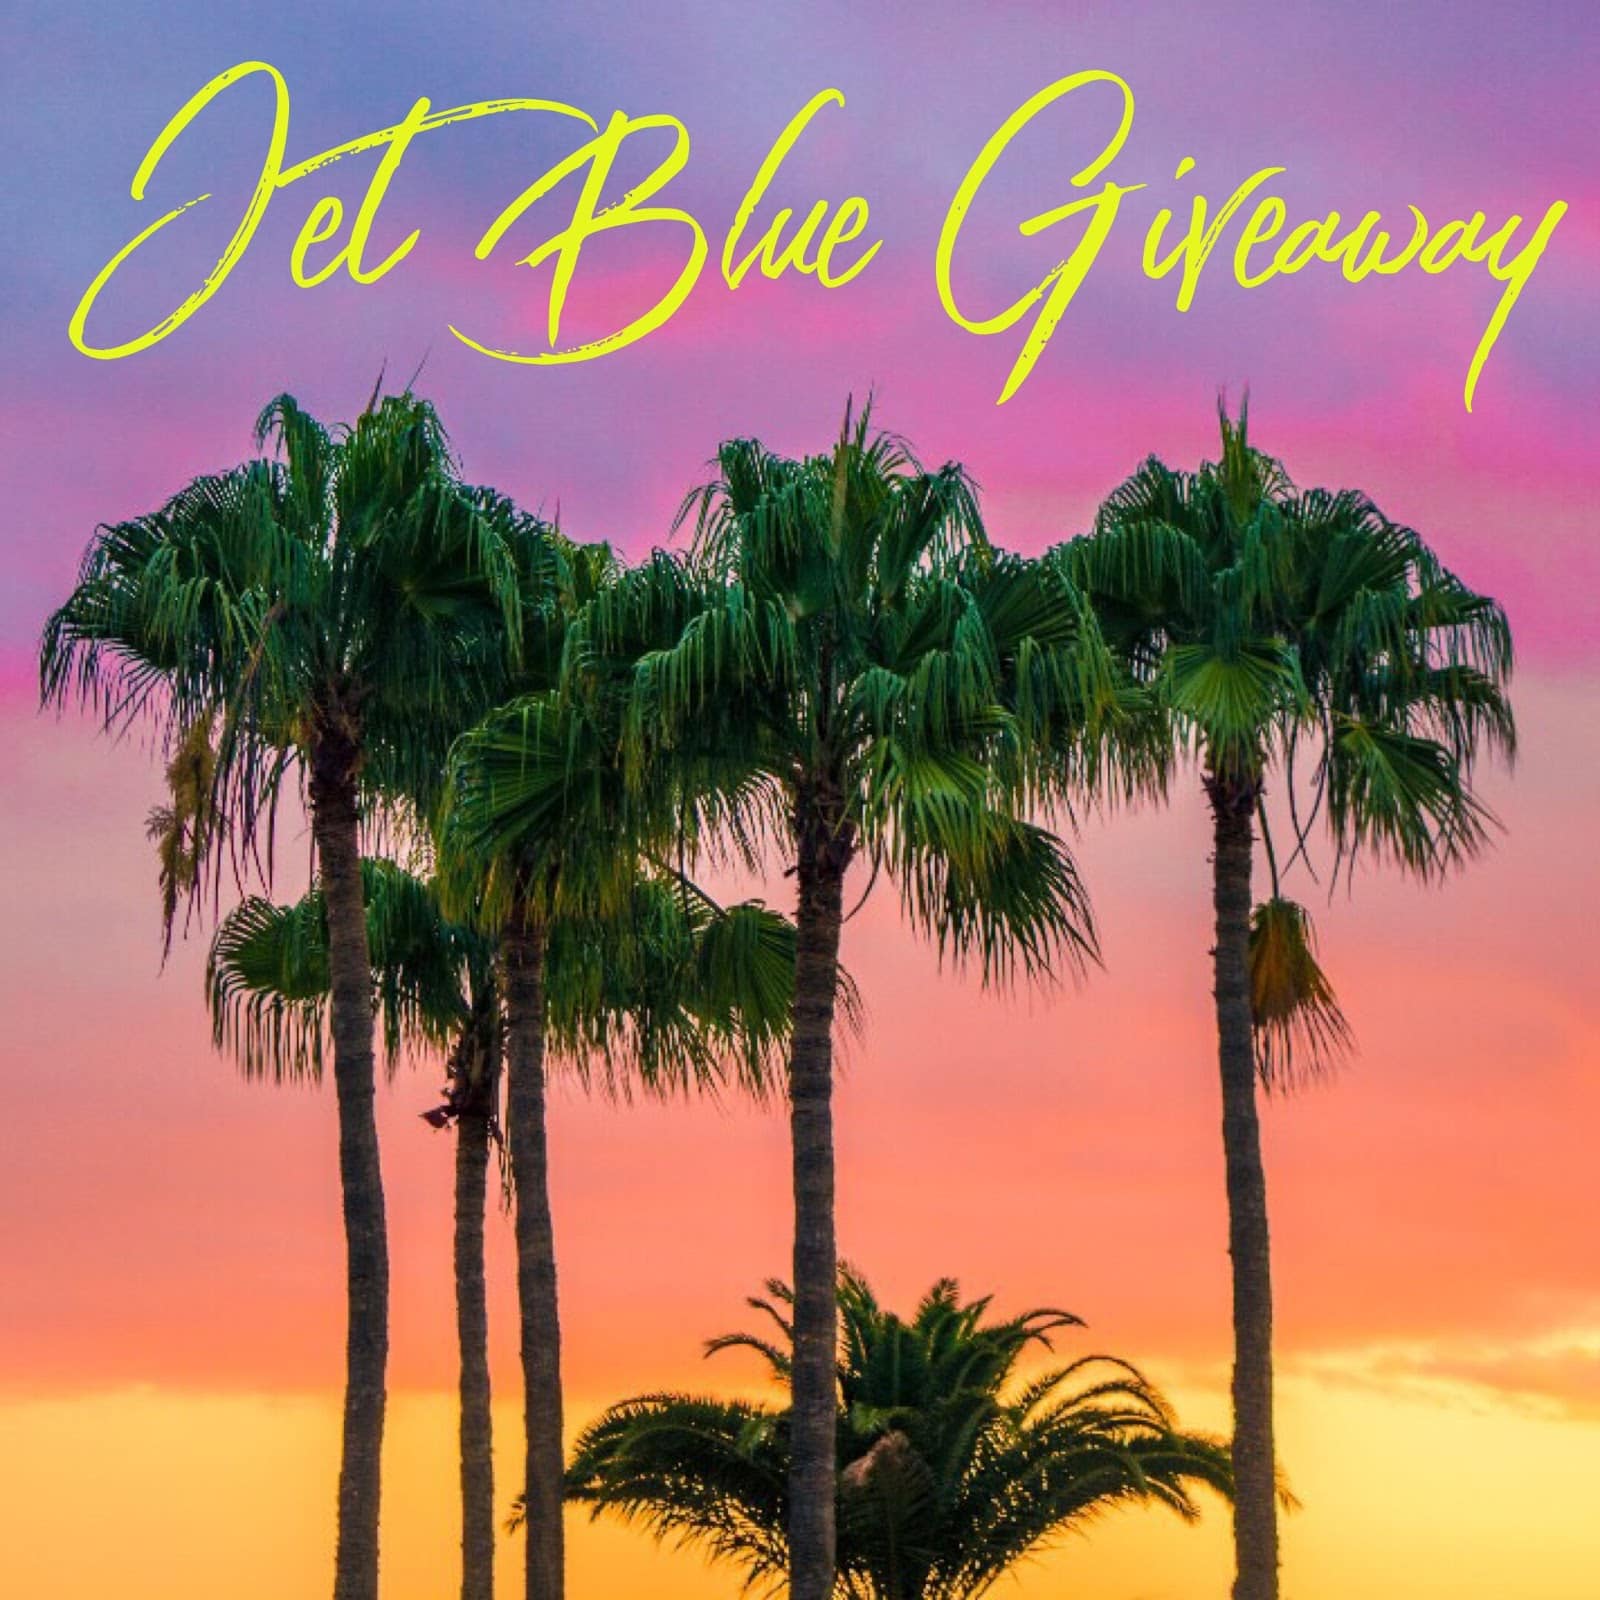 March Jet Blue Giveaway ends April 3, 2018